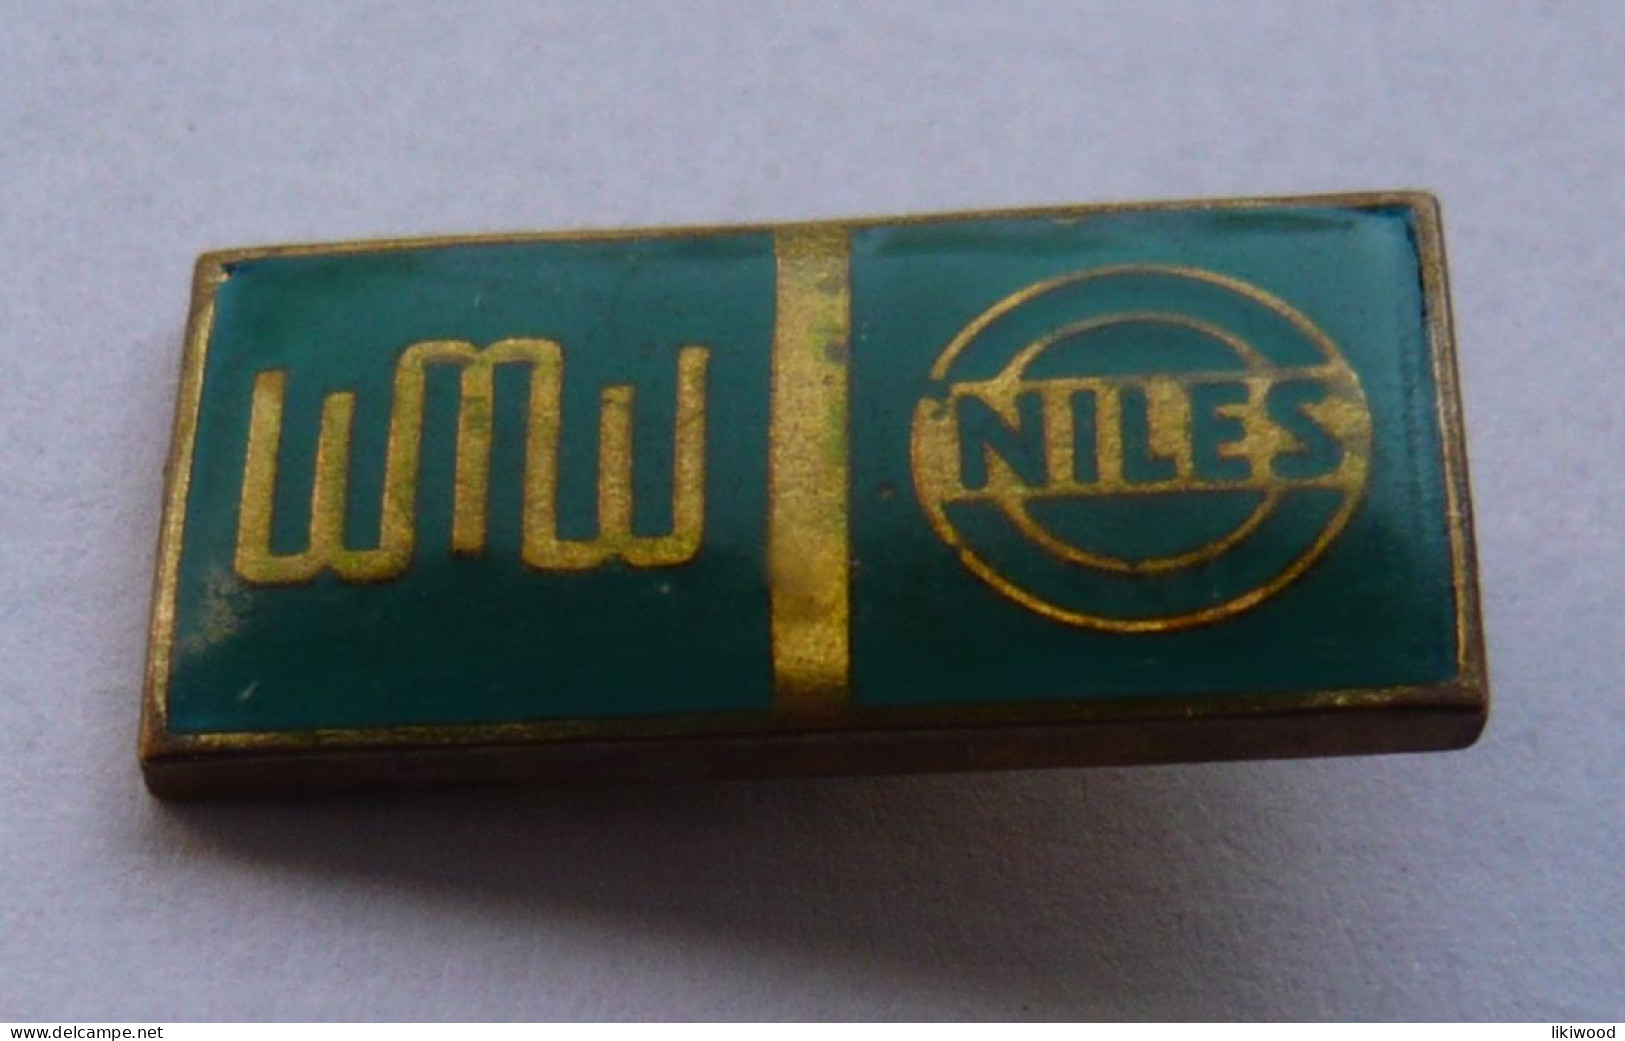 WMW Niles - Trademarks